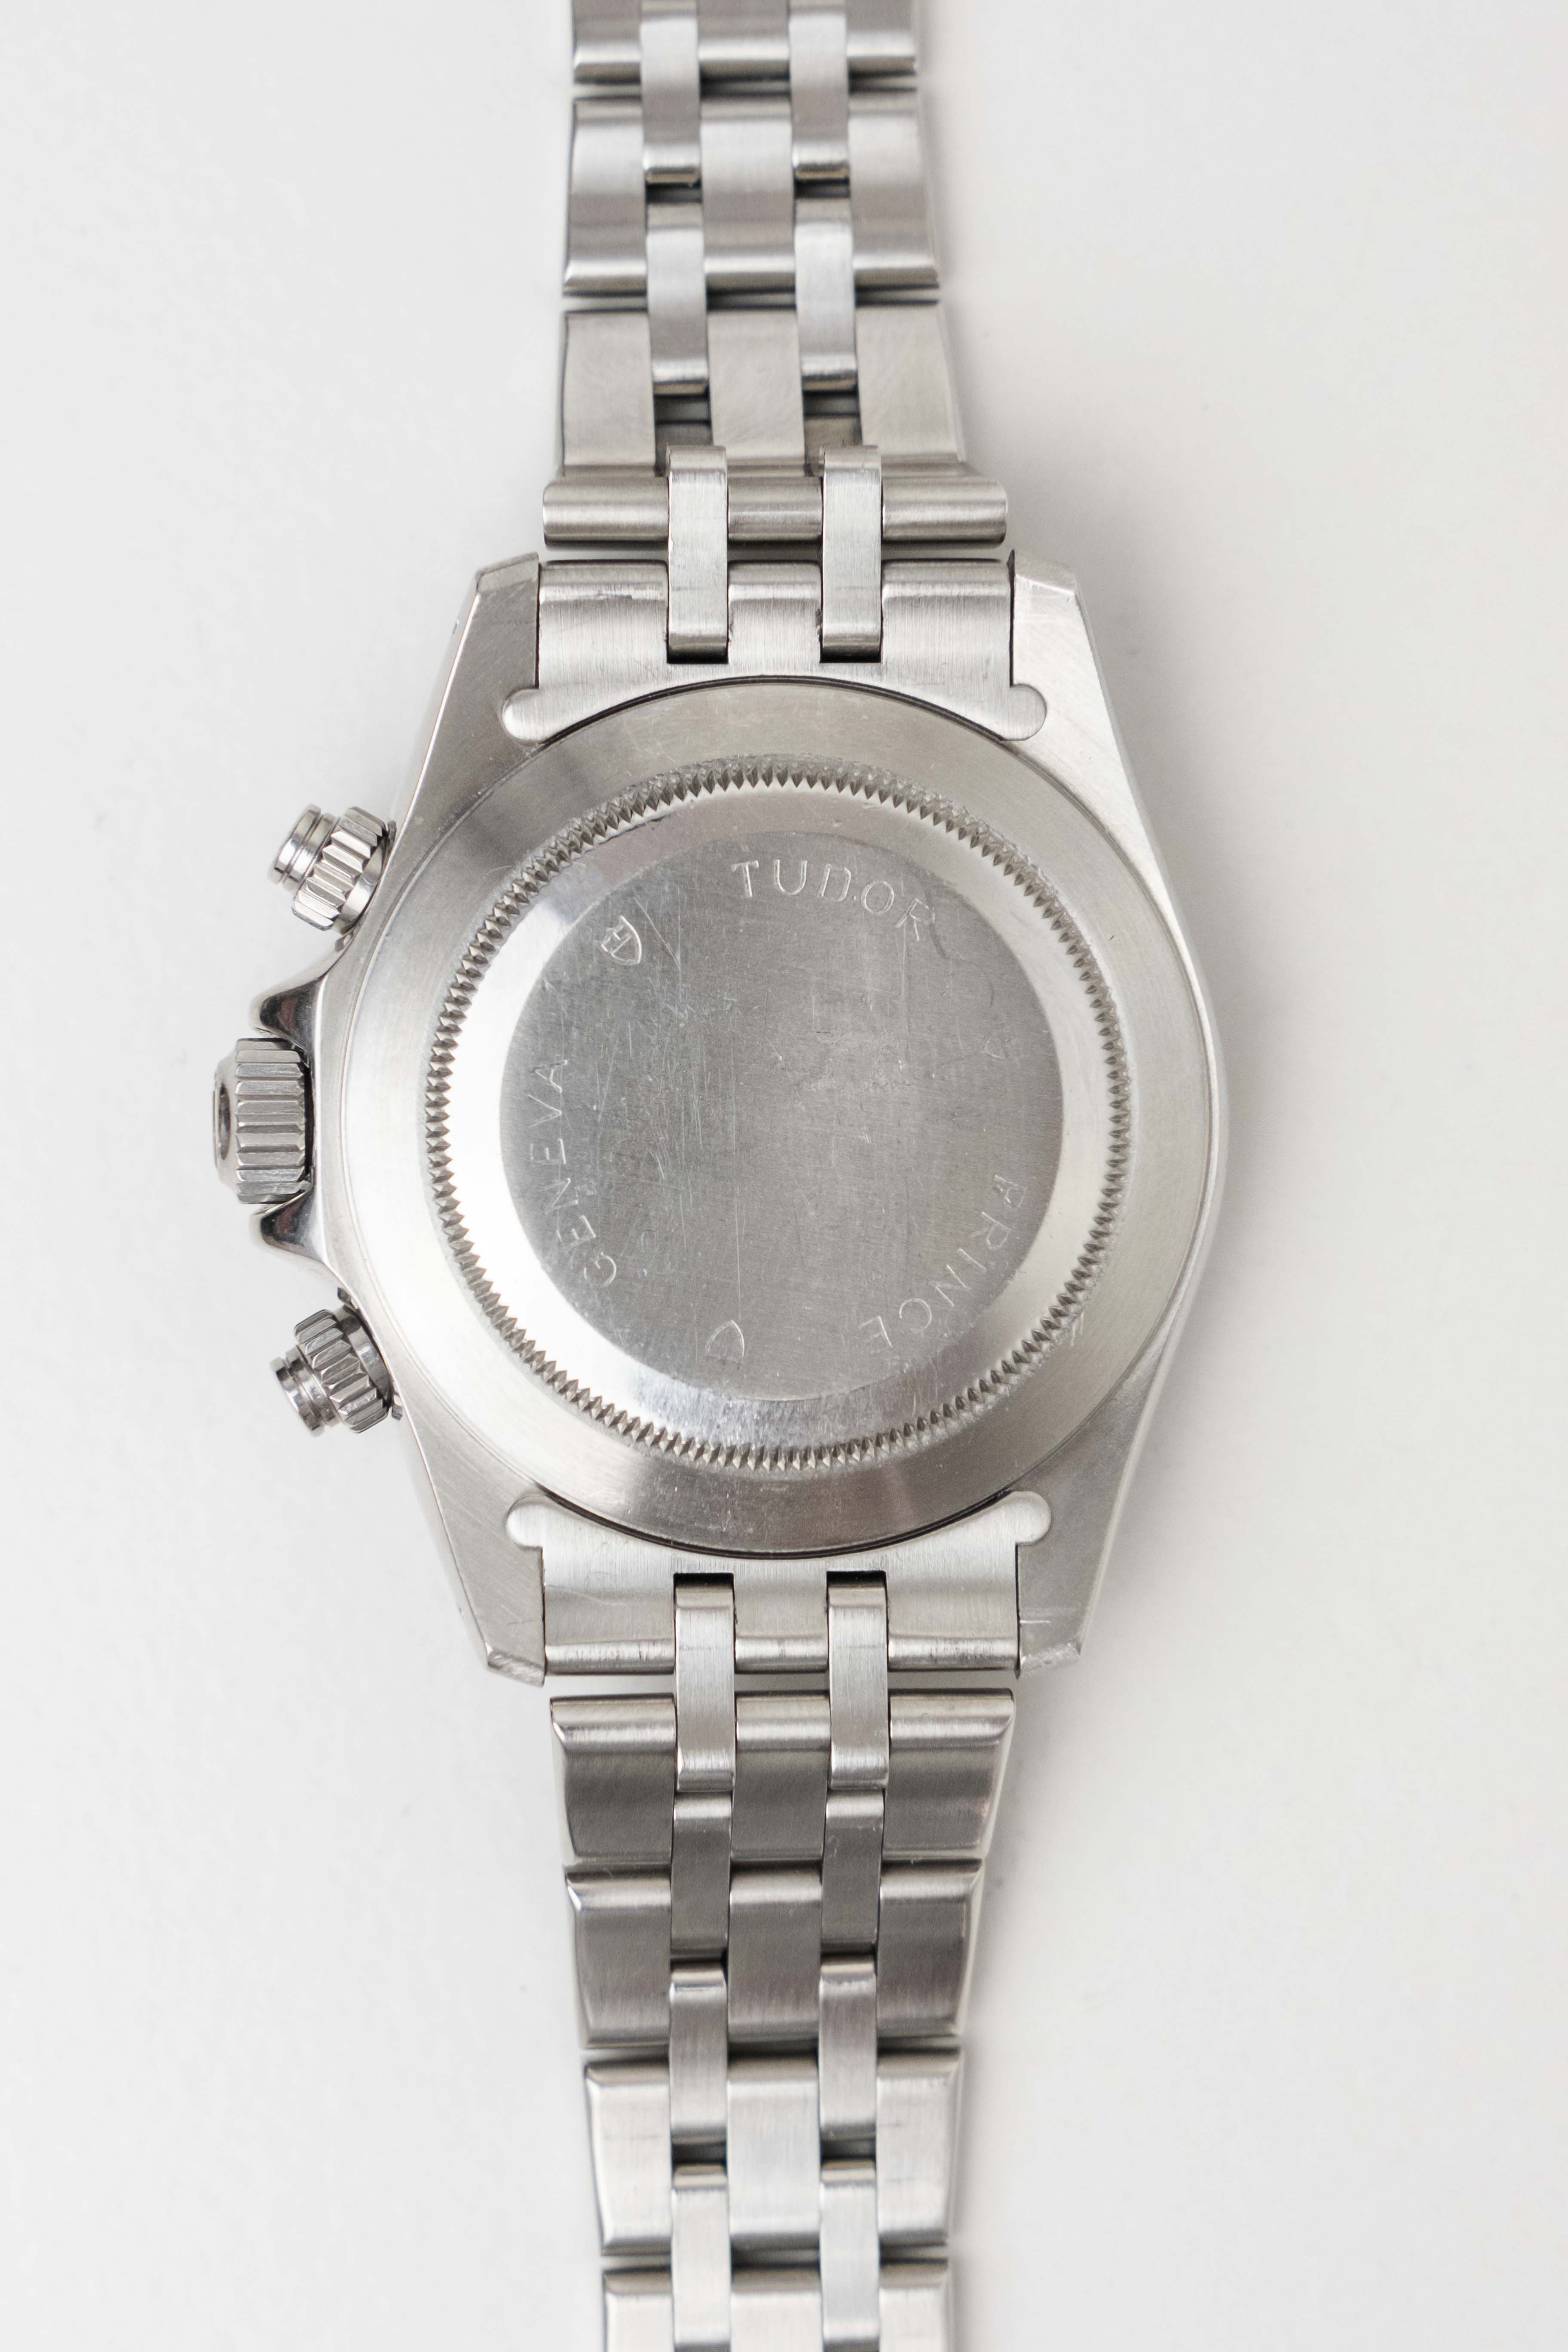 Tudor Tiger Prince Date Ref. 79280 2002